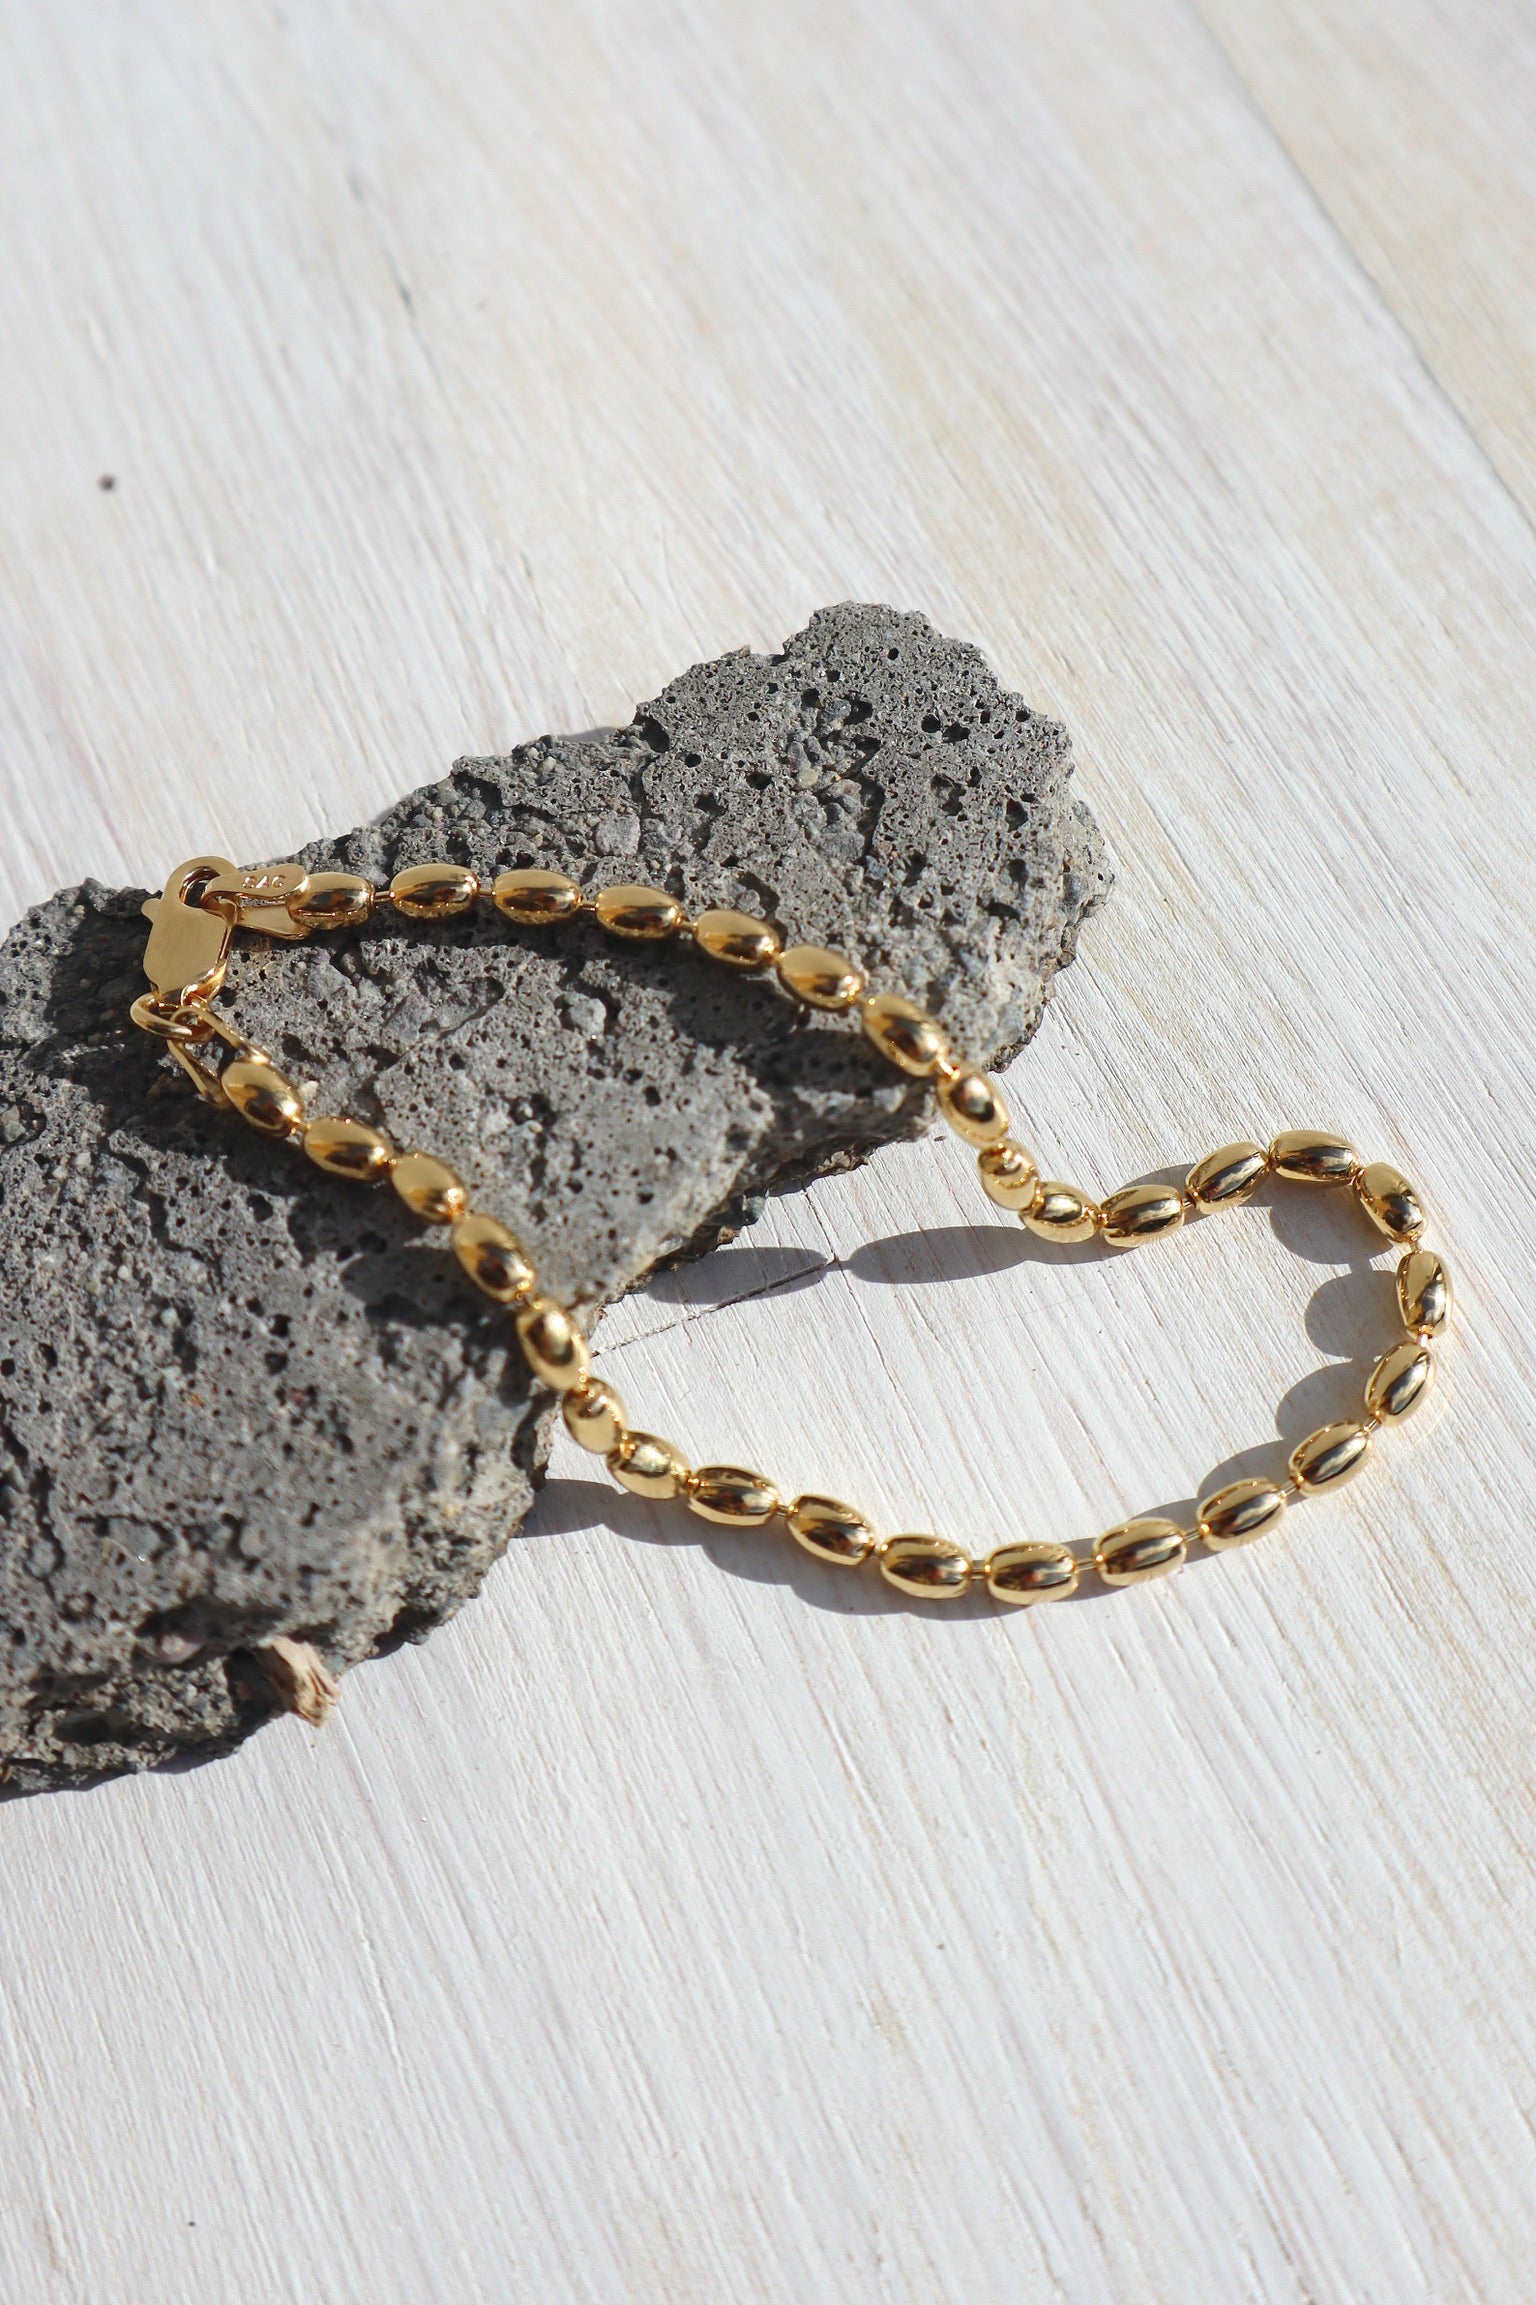 Wolf Circus Kai Oval Bead Chain Bracelet 14K / Gold Vermeil